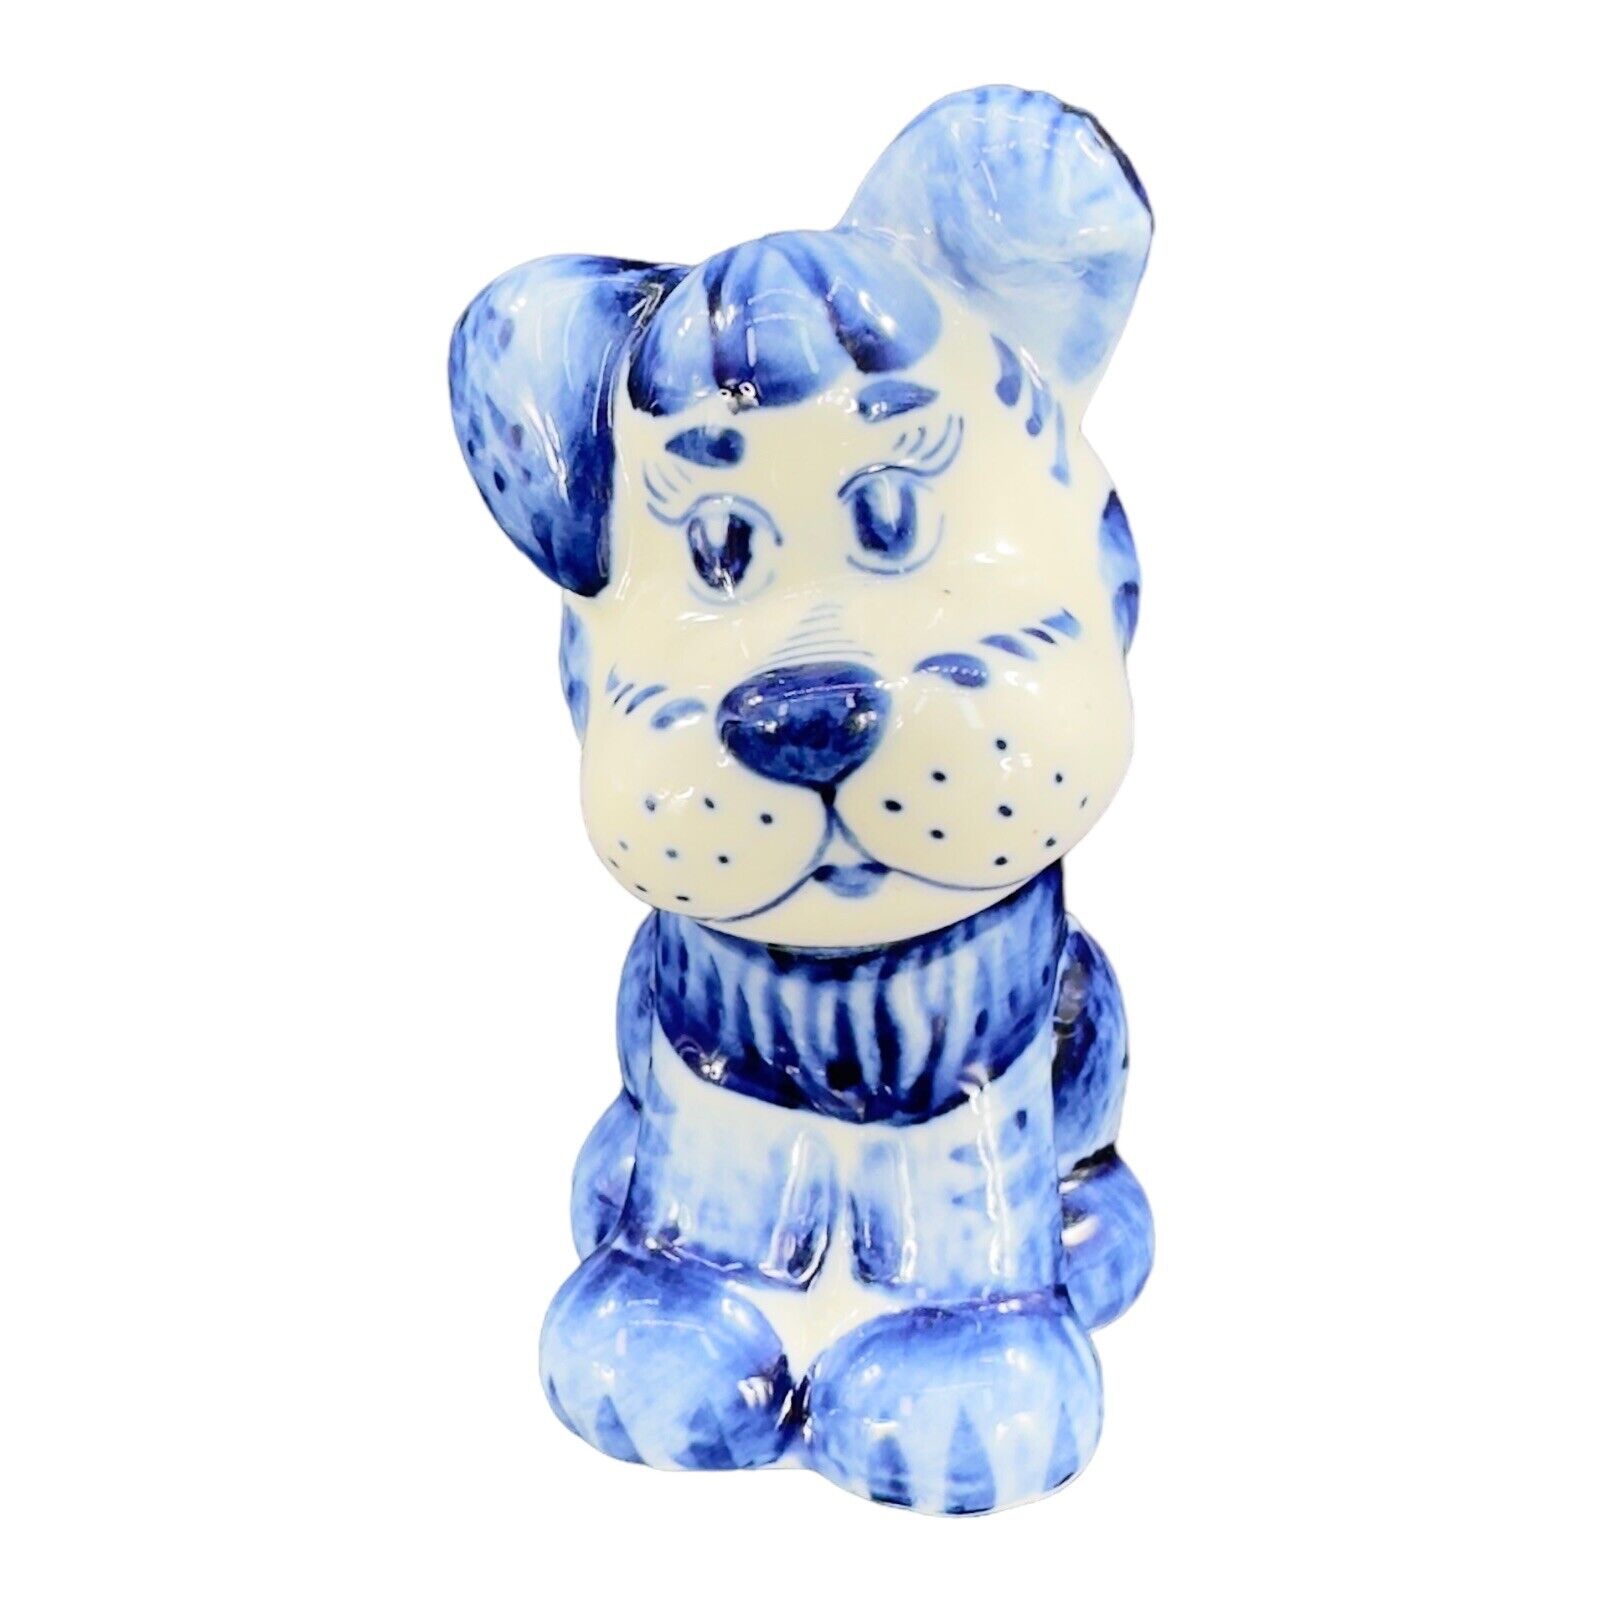 Gzhel Porcelain Ceramic Dog Figurine Handmade made in Russia Blue White Vintage